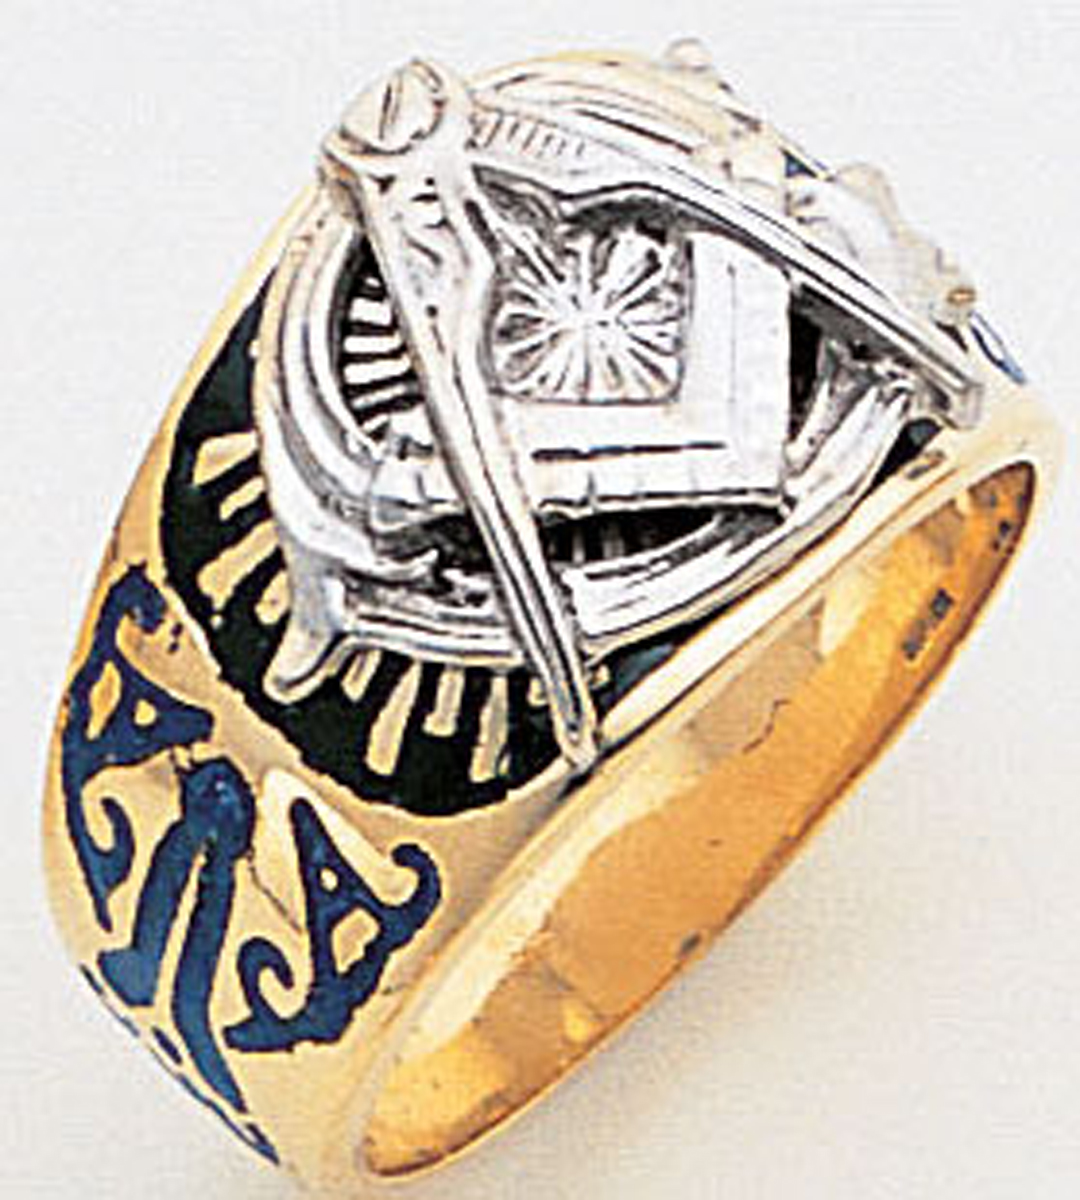 Gold Masonic Ring Solid Back 3320